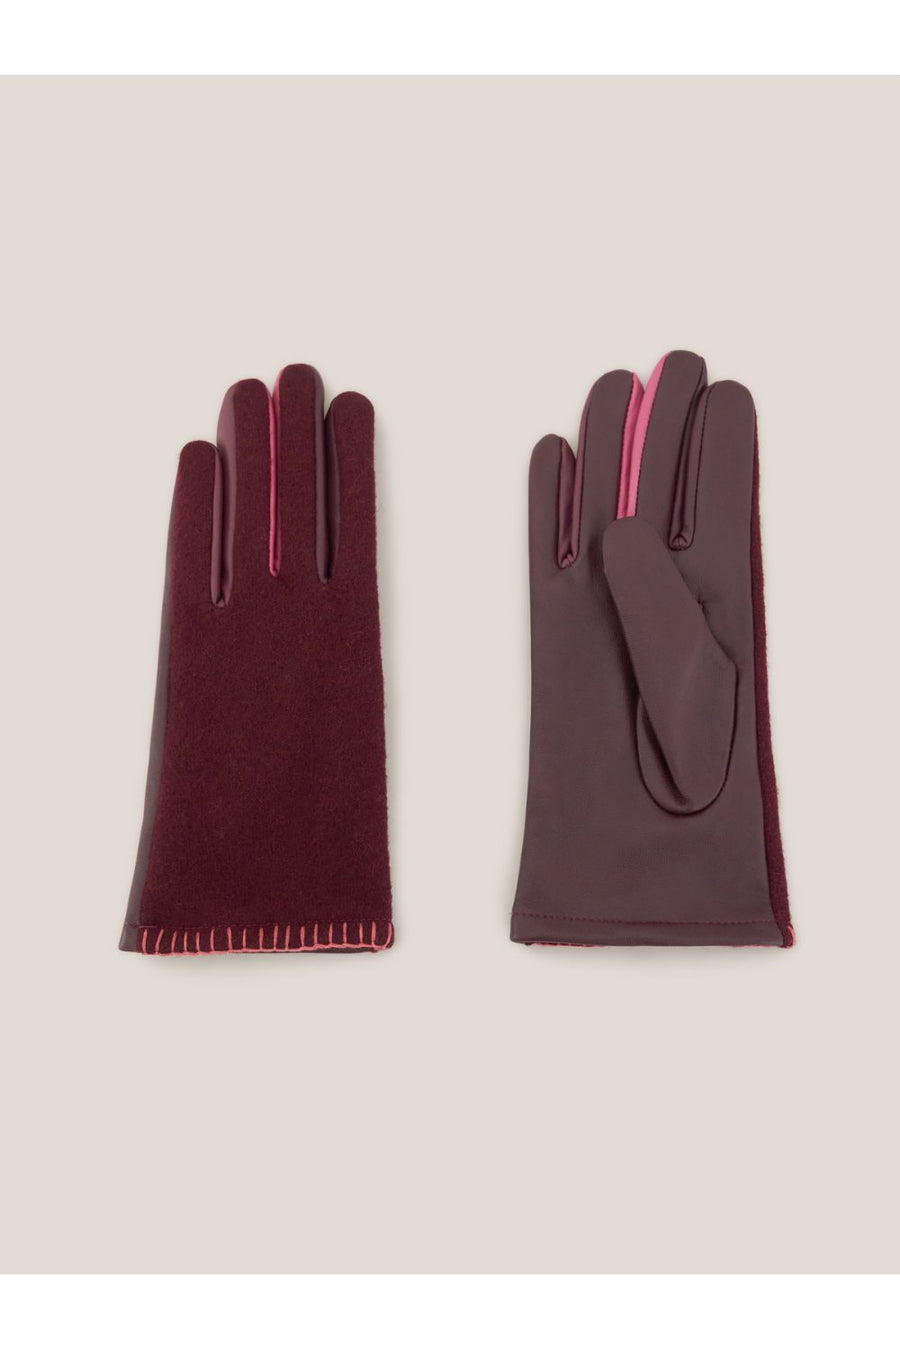 White Stuff Lucie Leather Glove plum Handschuhe